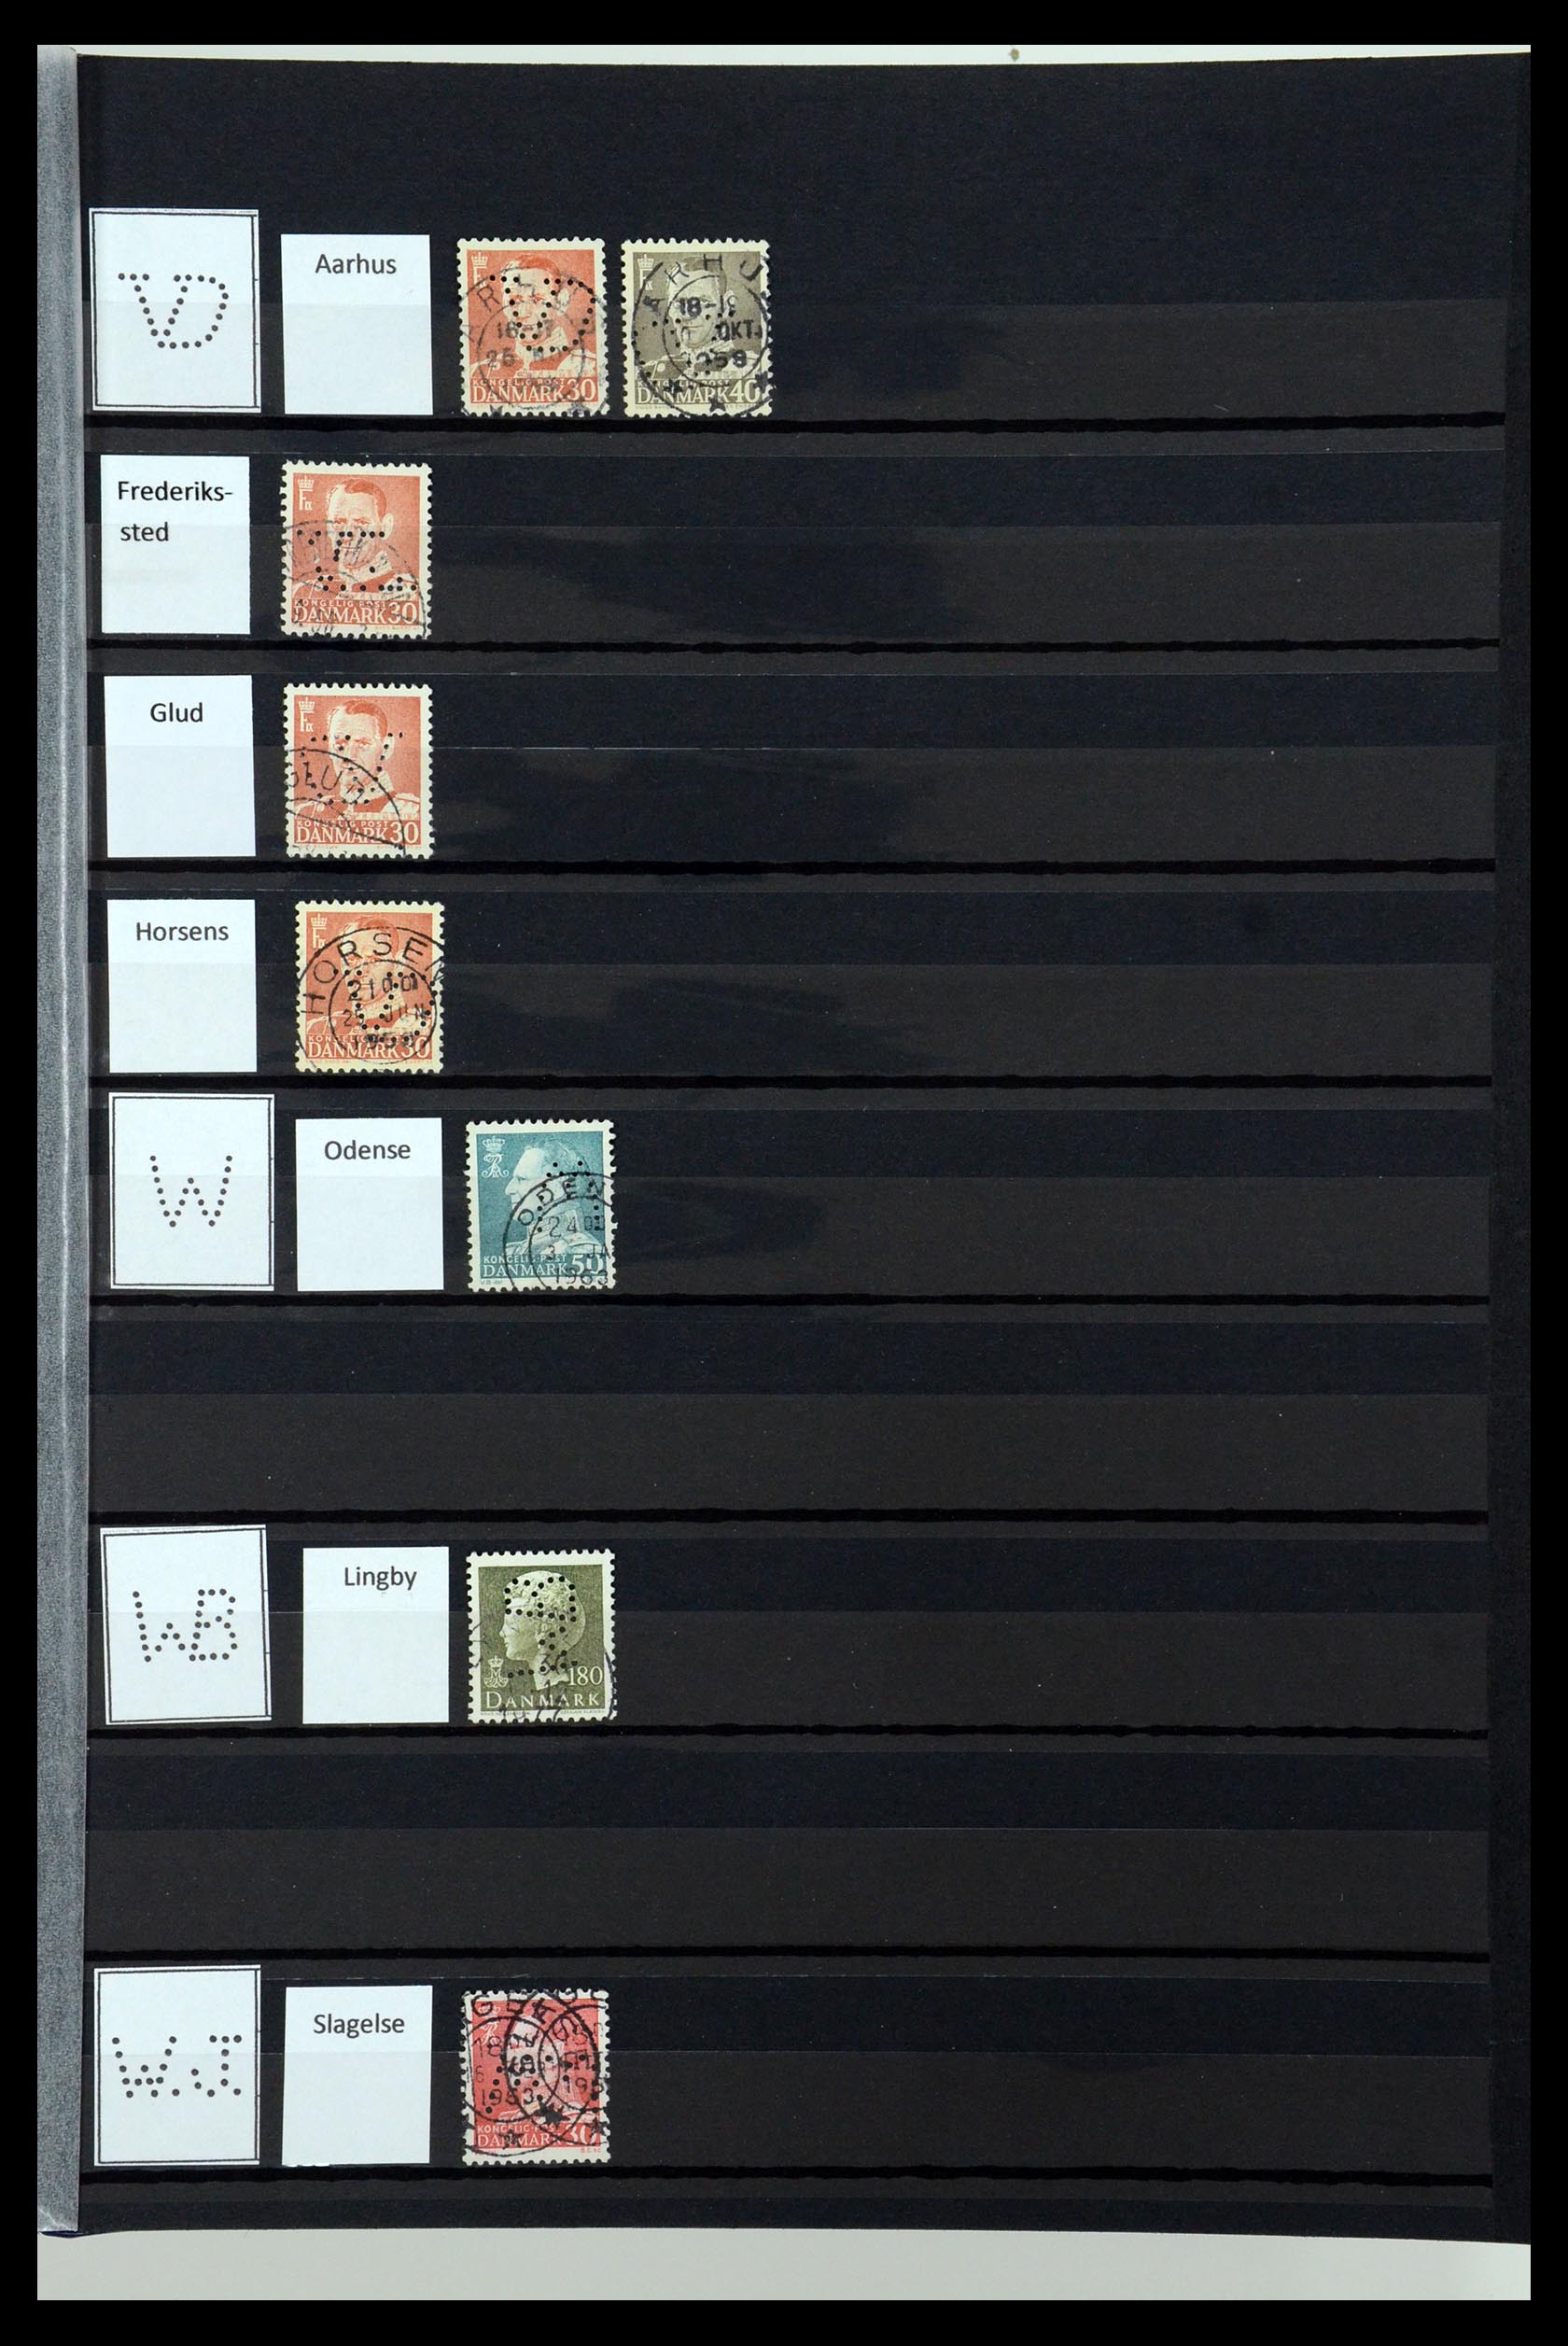 36396 110 - Stamp collection 36396 Denmark perfins.